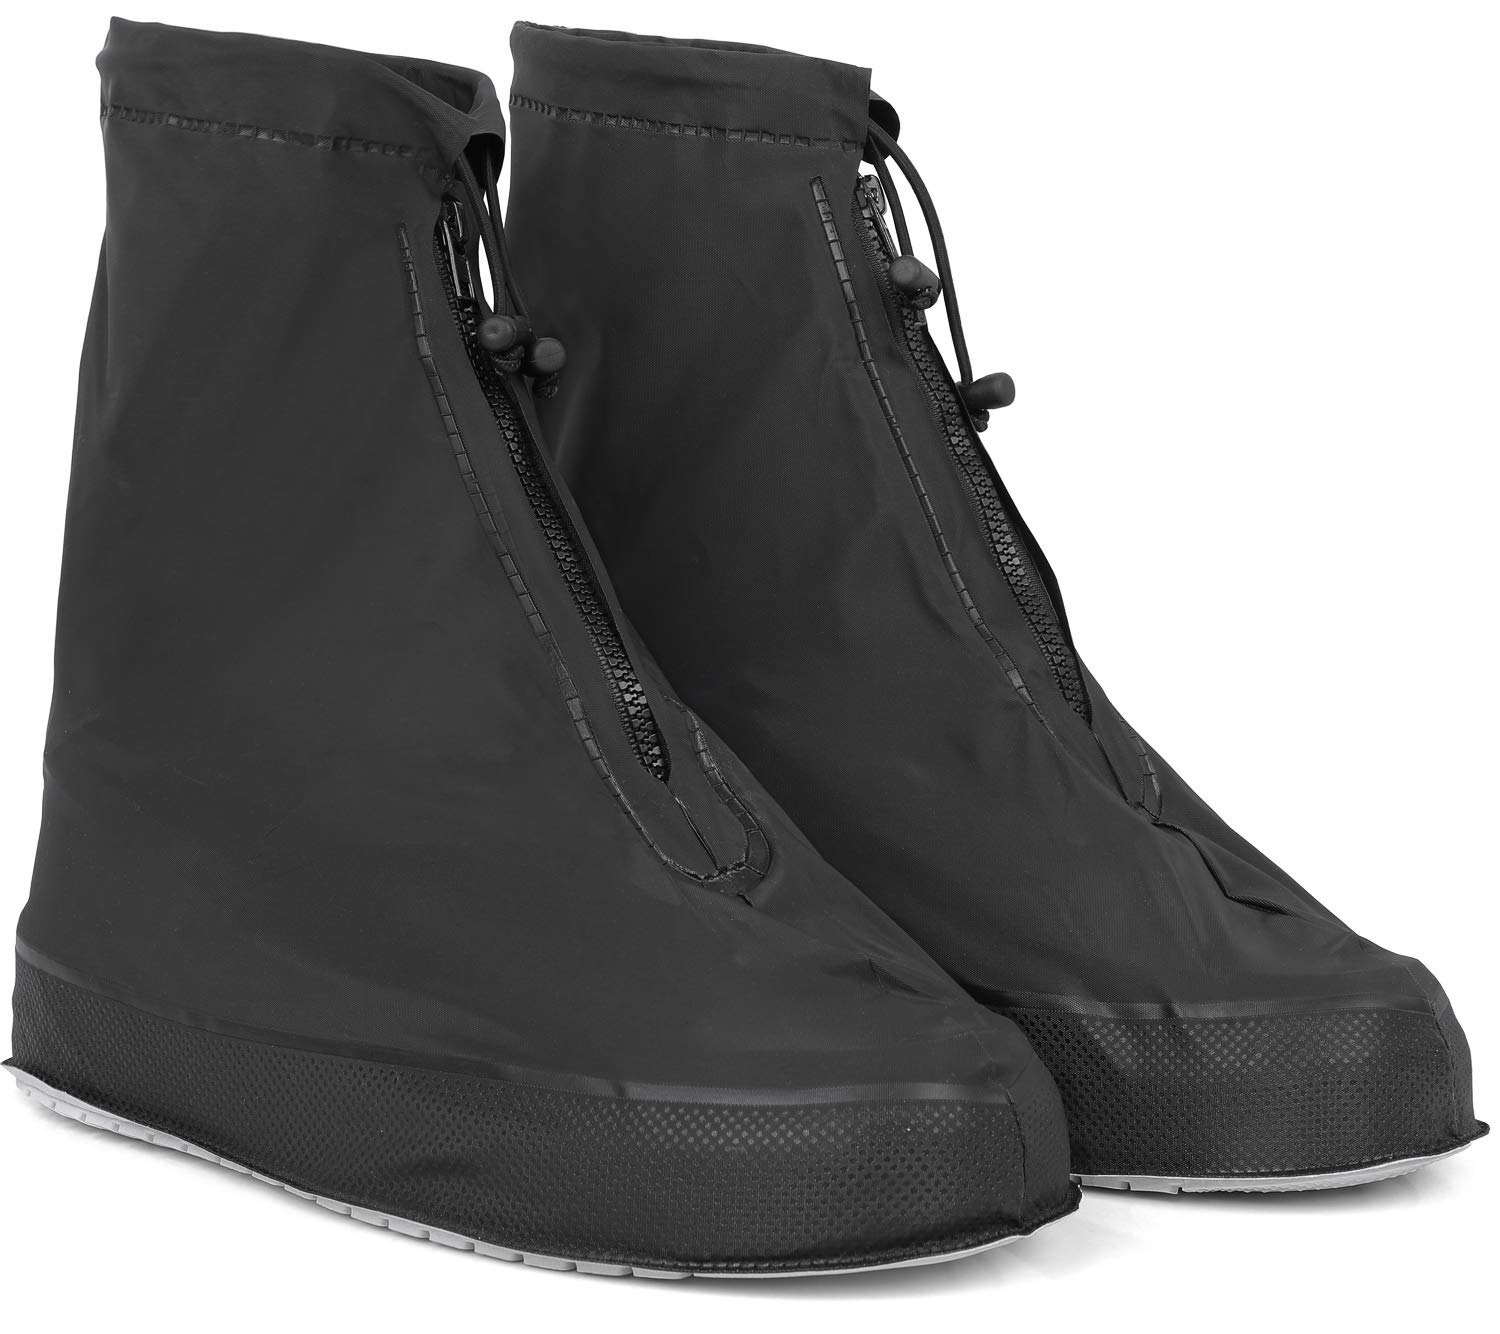 Galashield Rain Shoe covers  Waterproof Shoe covers for Men Women  Reusable galoshes Overshoes (Black, Medium)